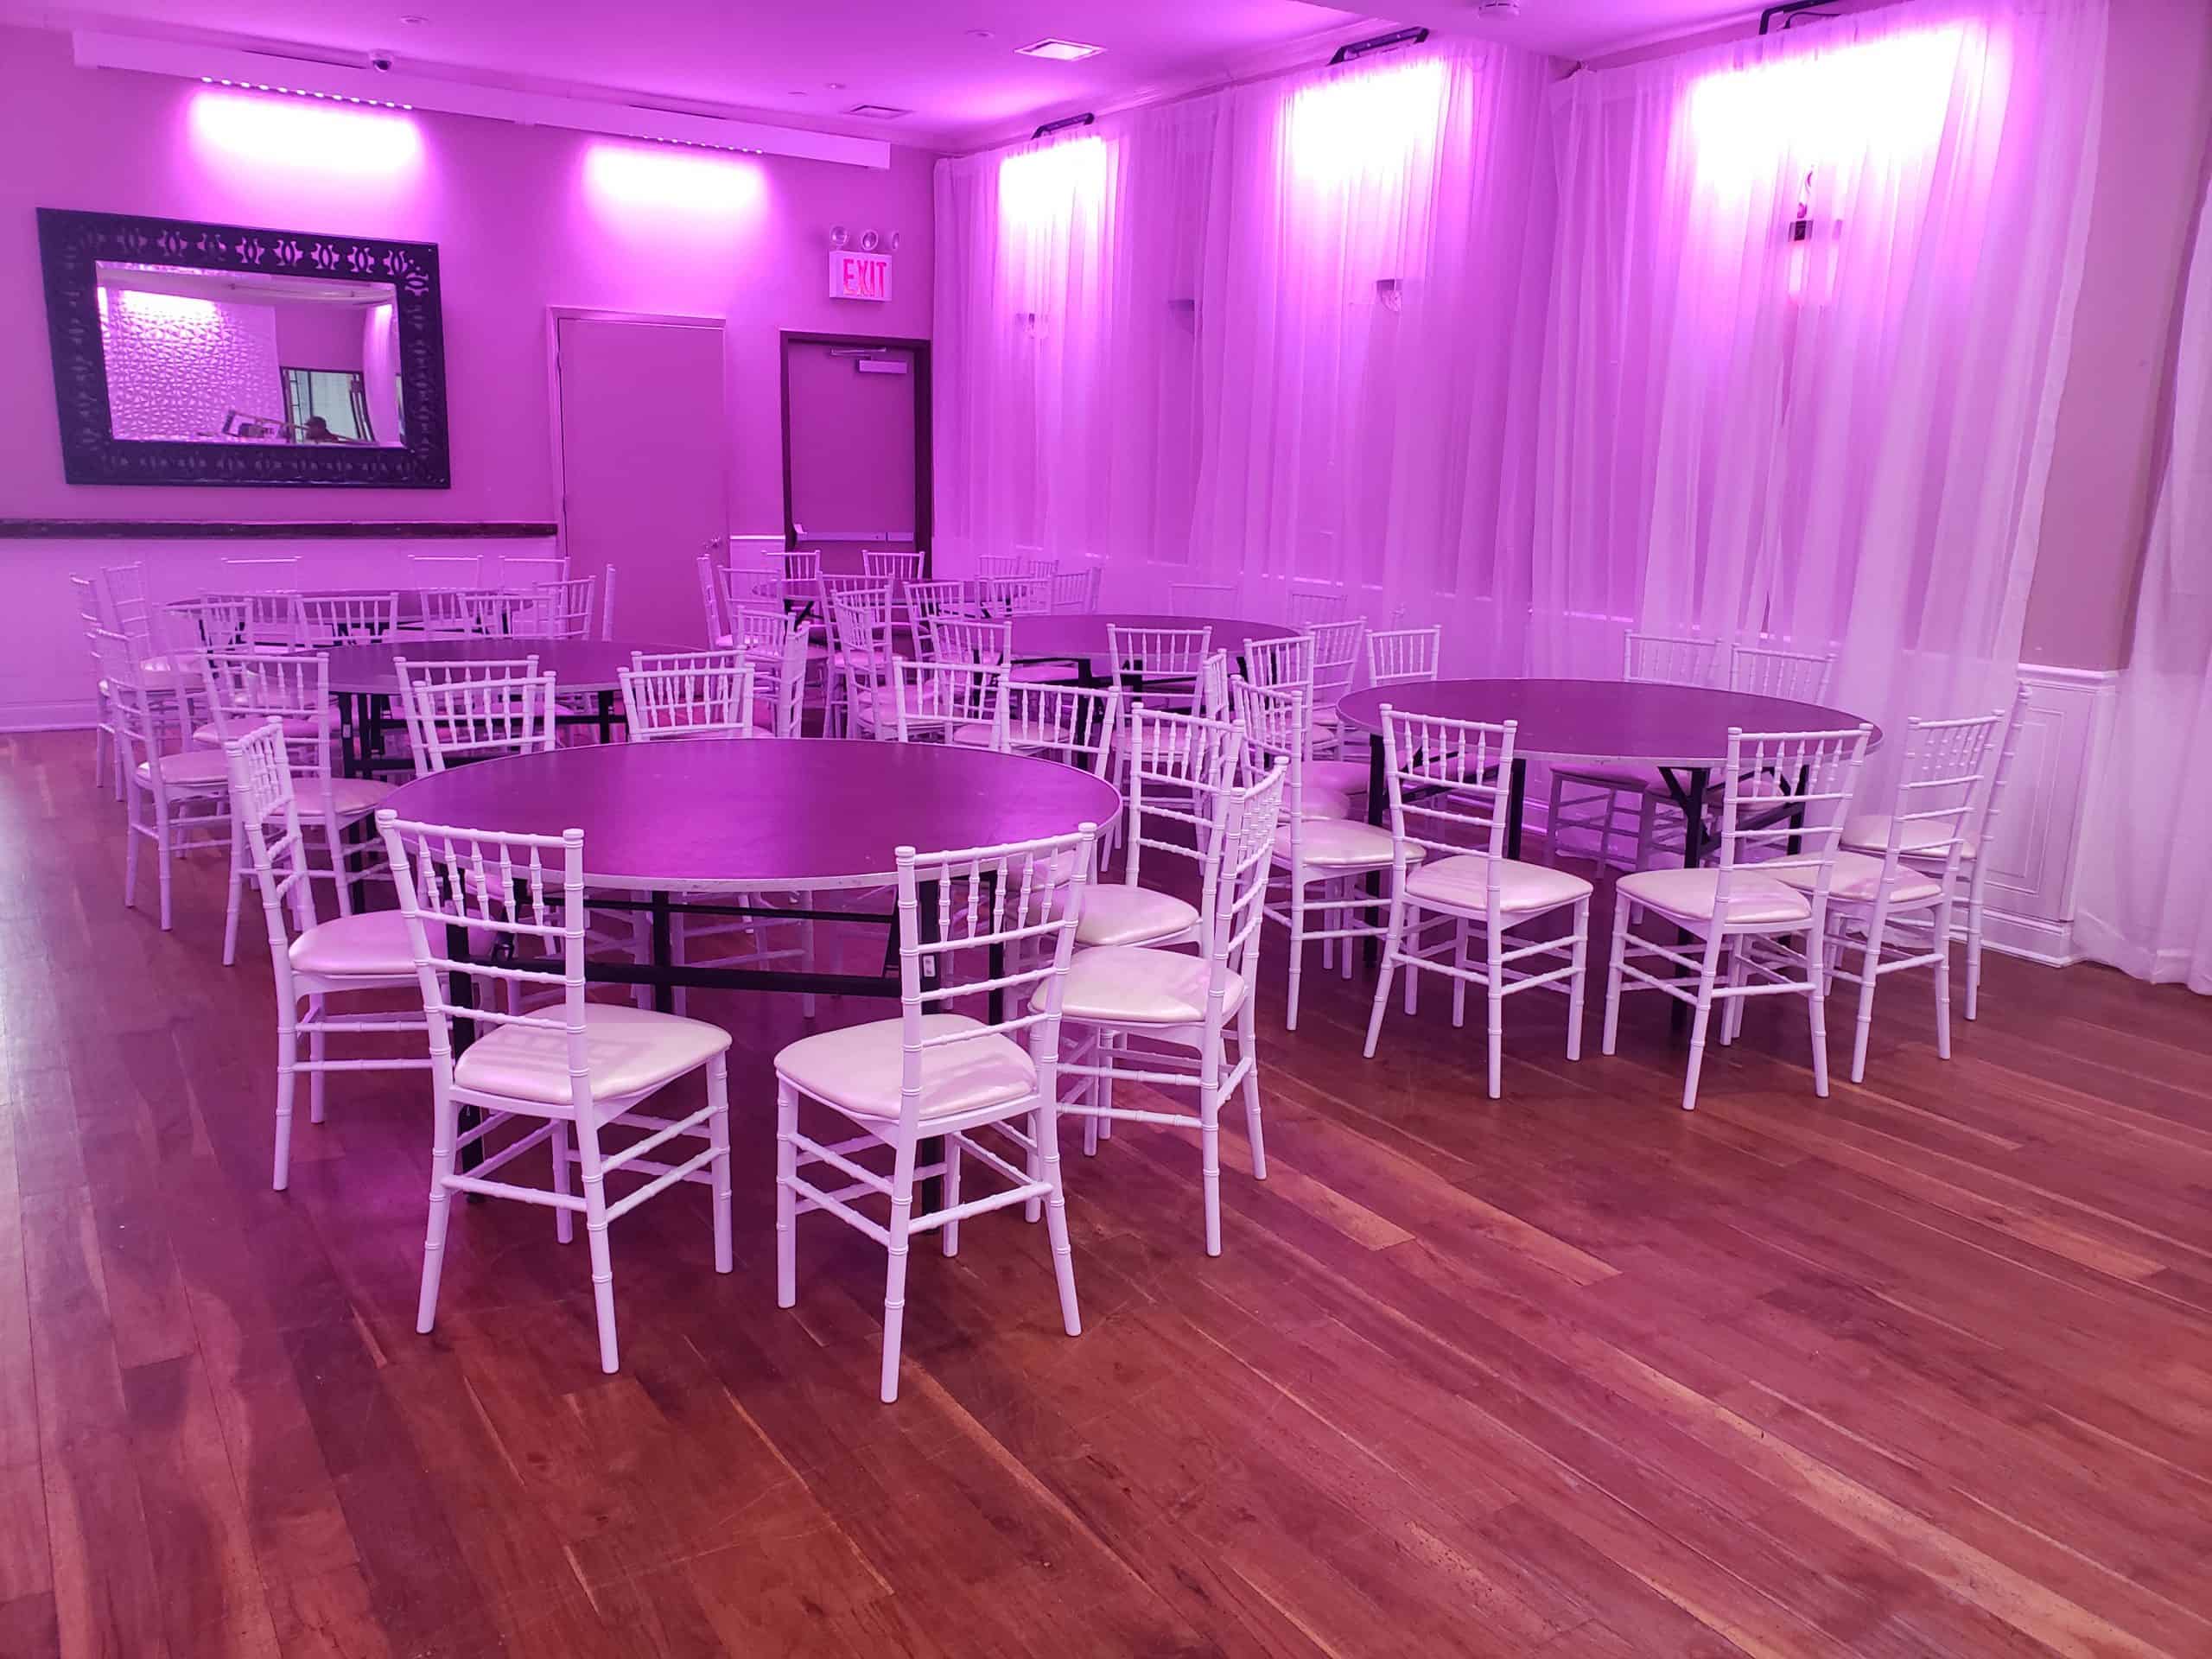 Marte-Hall-interior-with-pink-Lighting